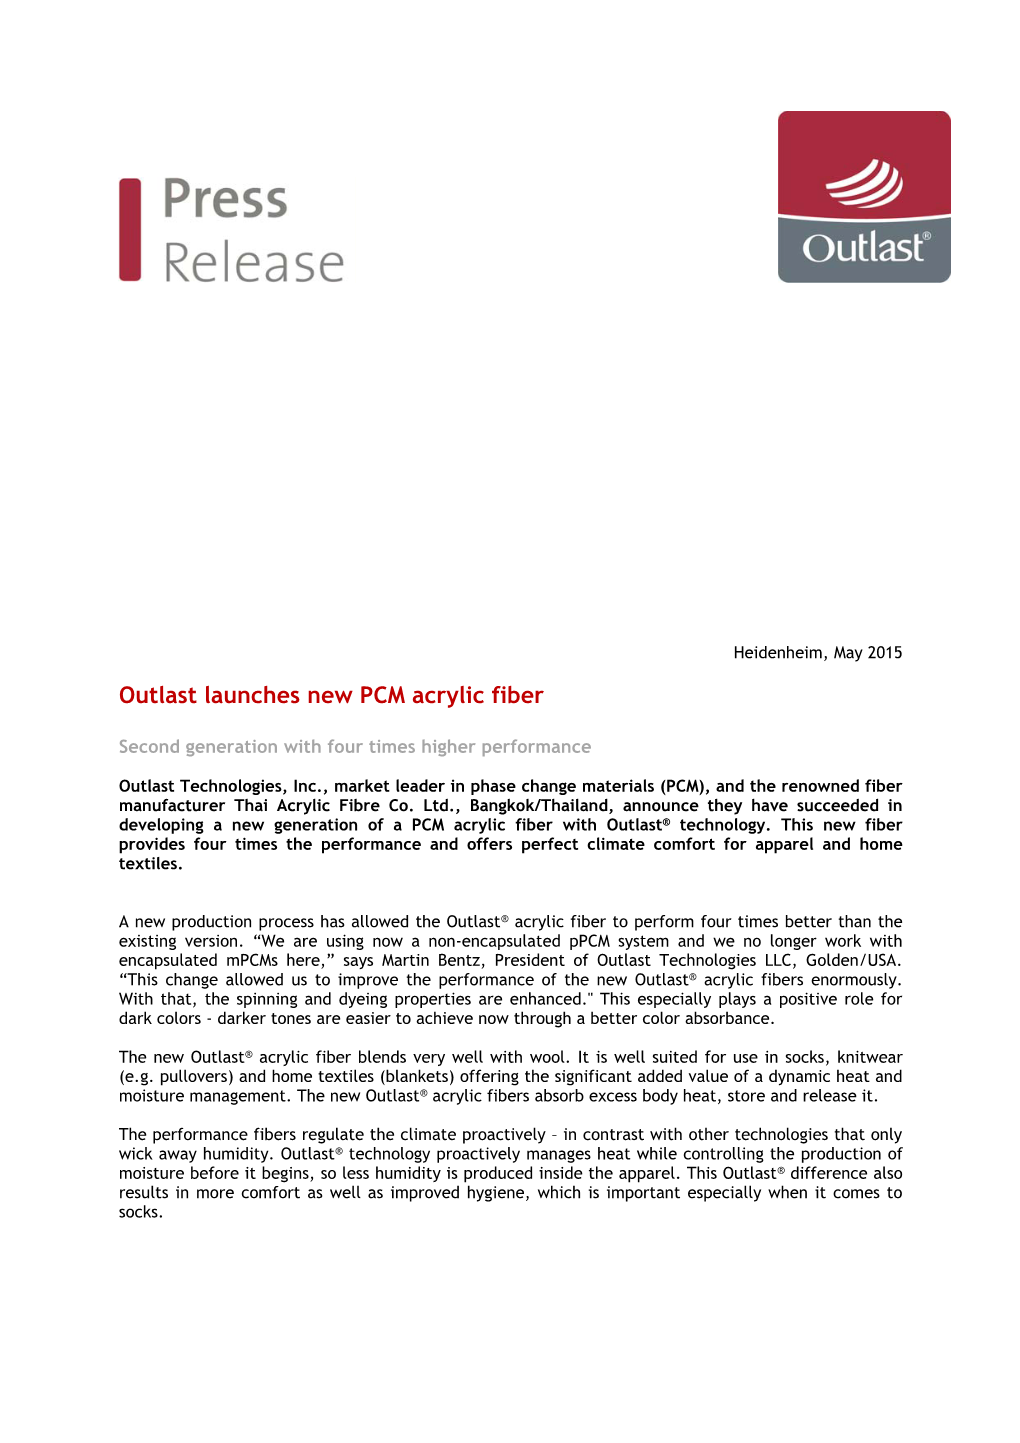 Outlast Launches New PCM Acrylic Fiber